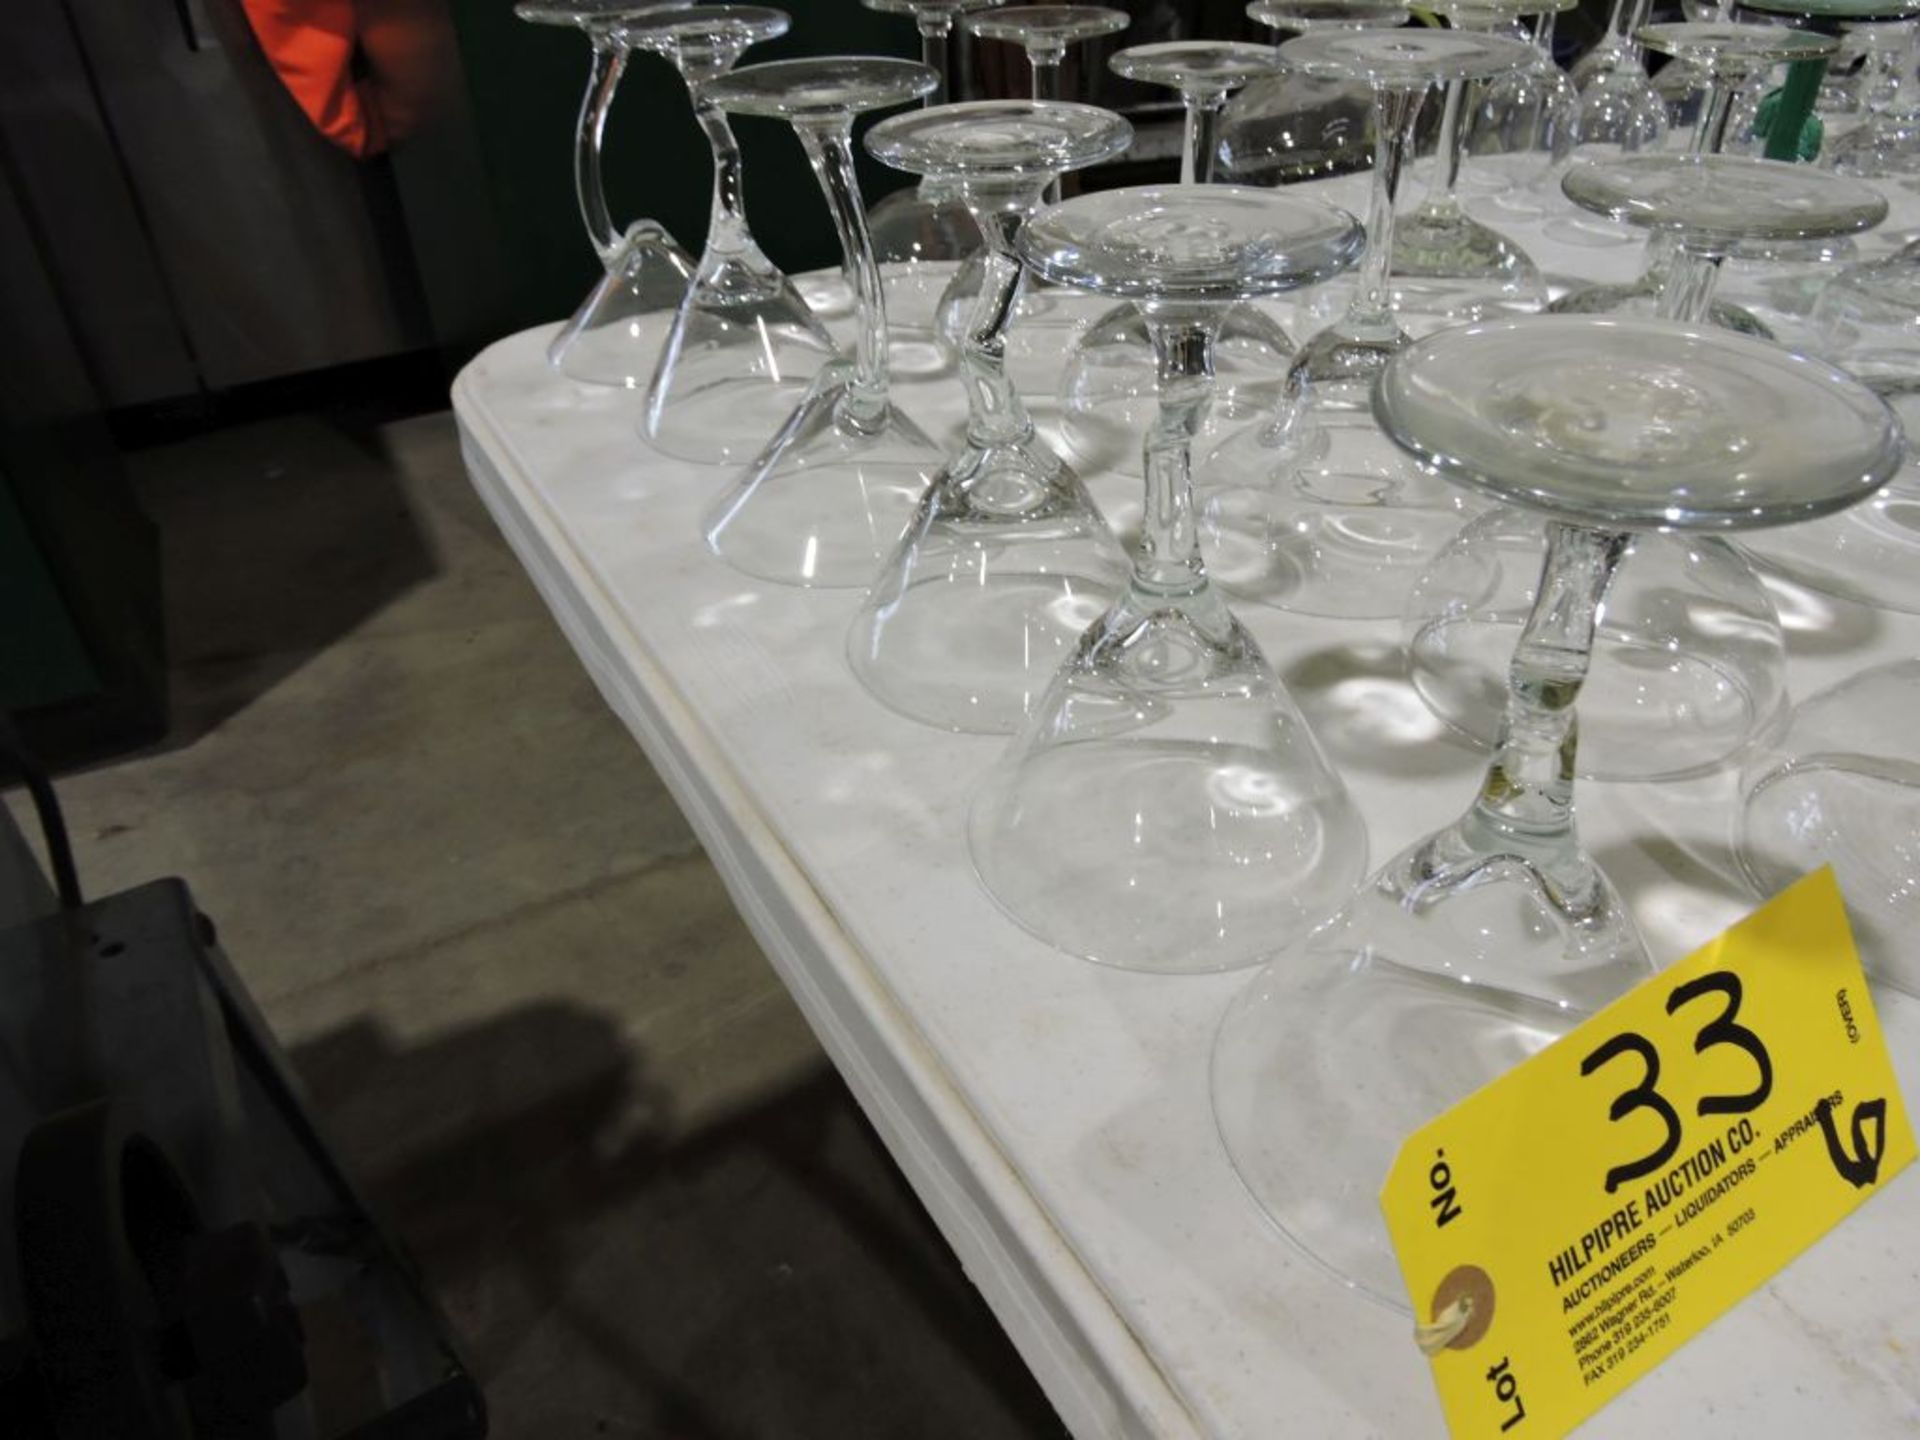 Crooked stem martini type glasses.